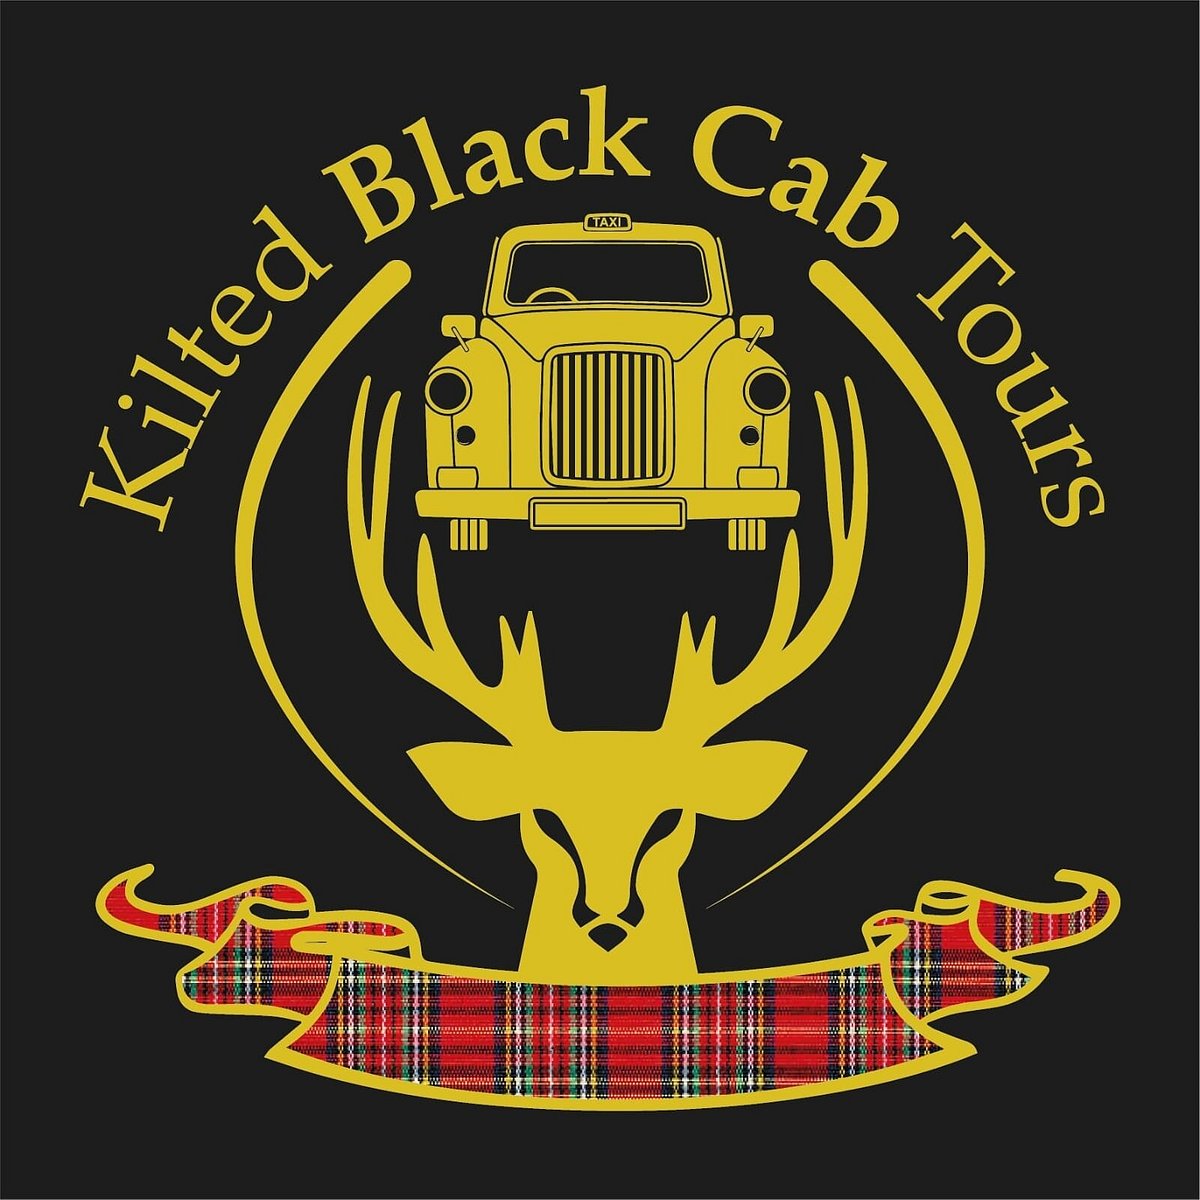 kilted black cab tours